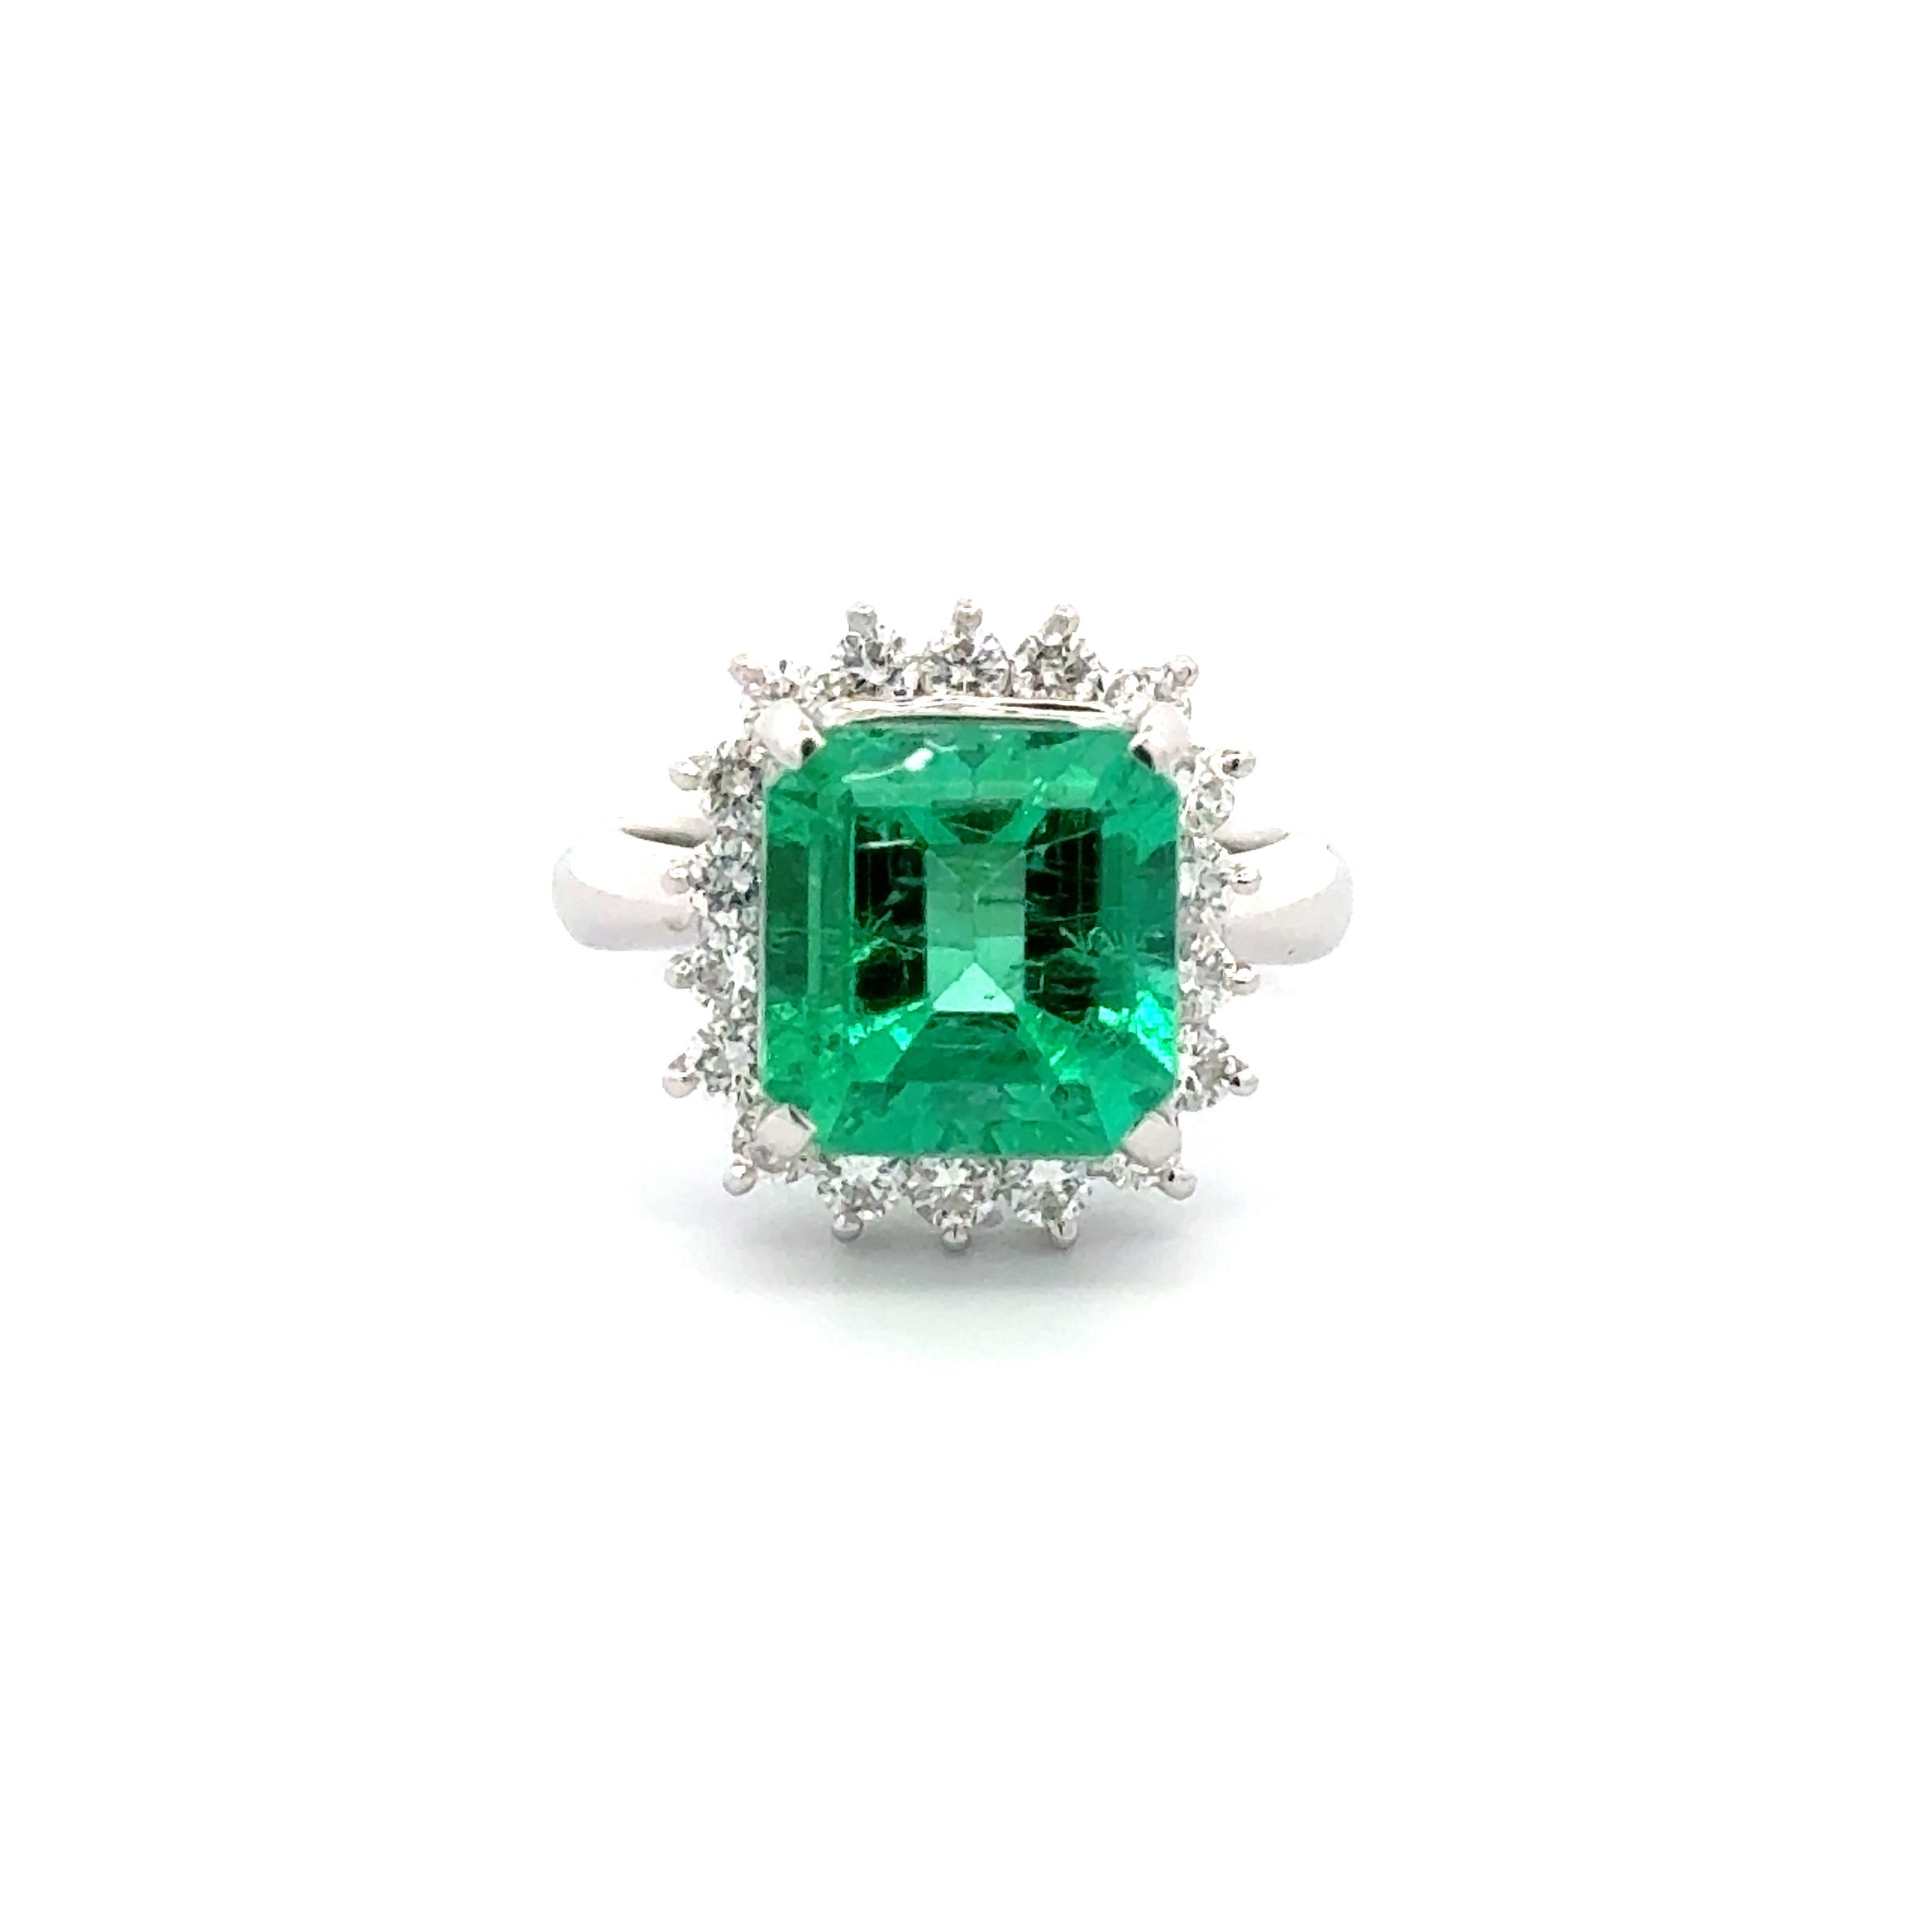 Platinum 3.74ct Emerald Cut Emerald GRS Minor to Moderate & .59tcw RBC Diamond Ring8.5g, s5